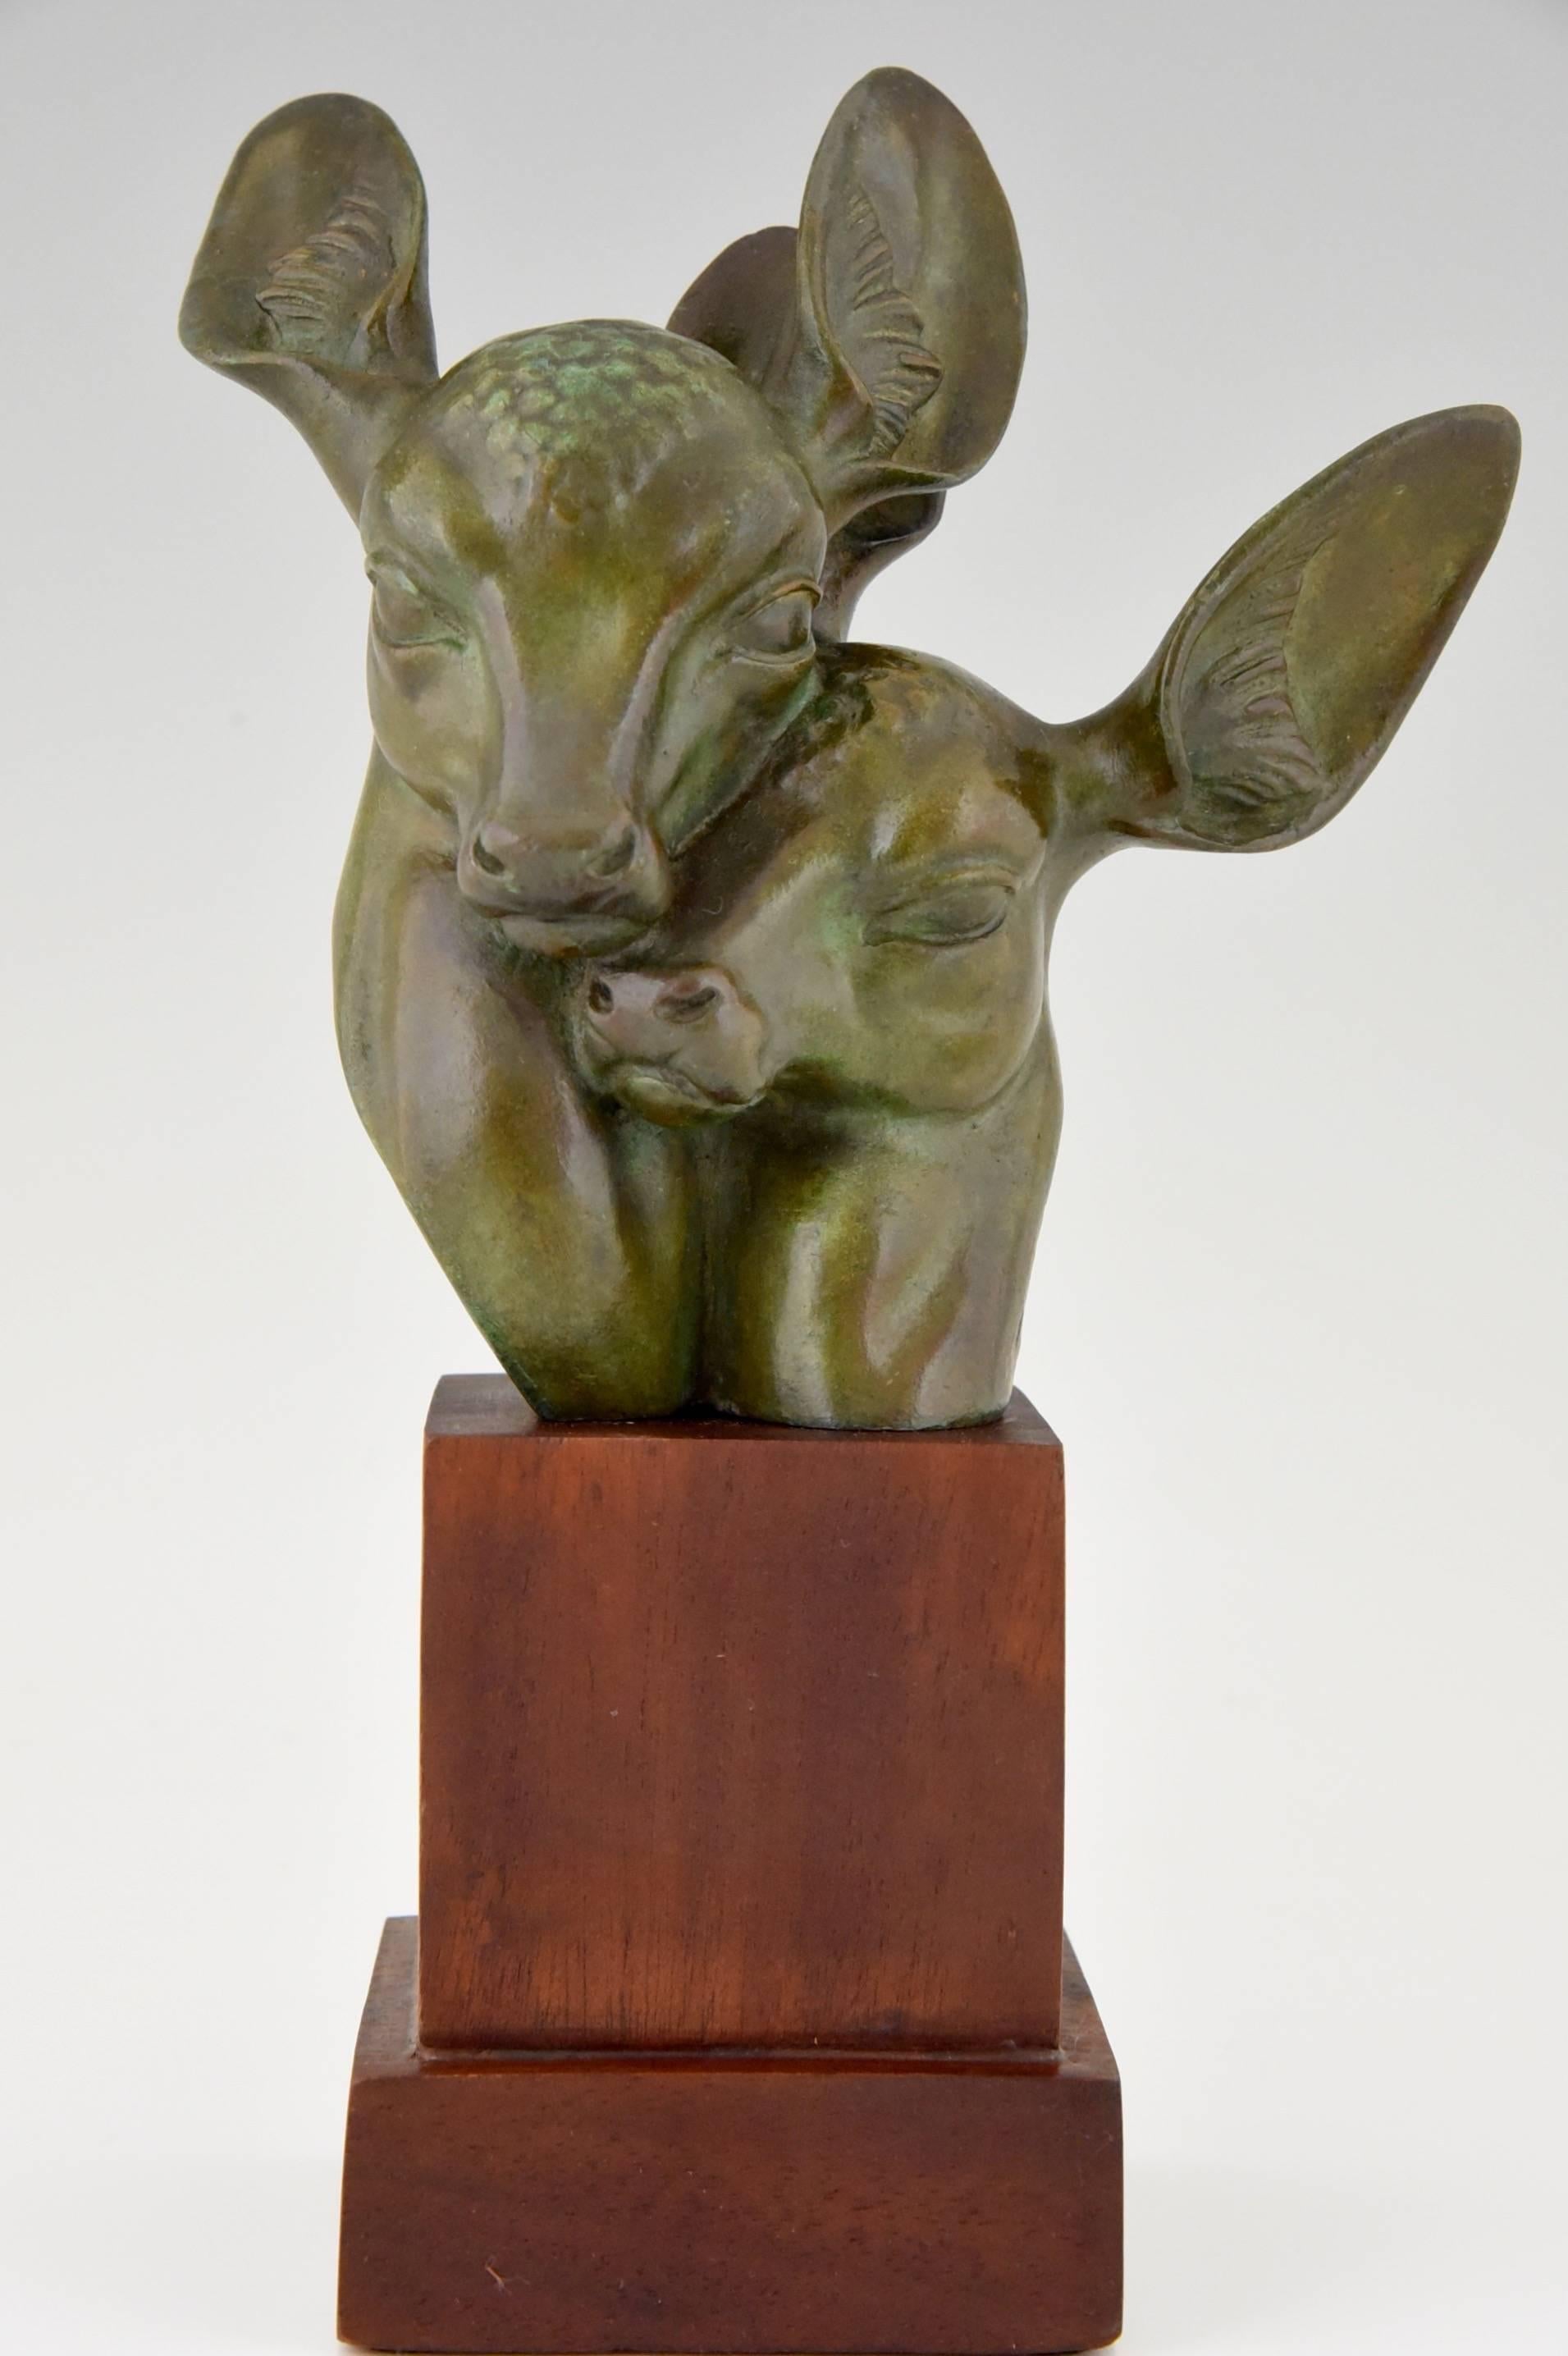 Description: Art Deco bronze bust of two deer. 
Artist/ Maker: Georges H. Laurent.
Signature / Marks:  G.H. Laurent. Bronze.
Style: Art Deco. 
Date: 1925/1930.
Material: Patinated bronze. Wooden base.
Origin: France. 
Size: 
H 11 inch x L